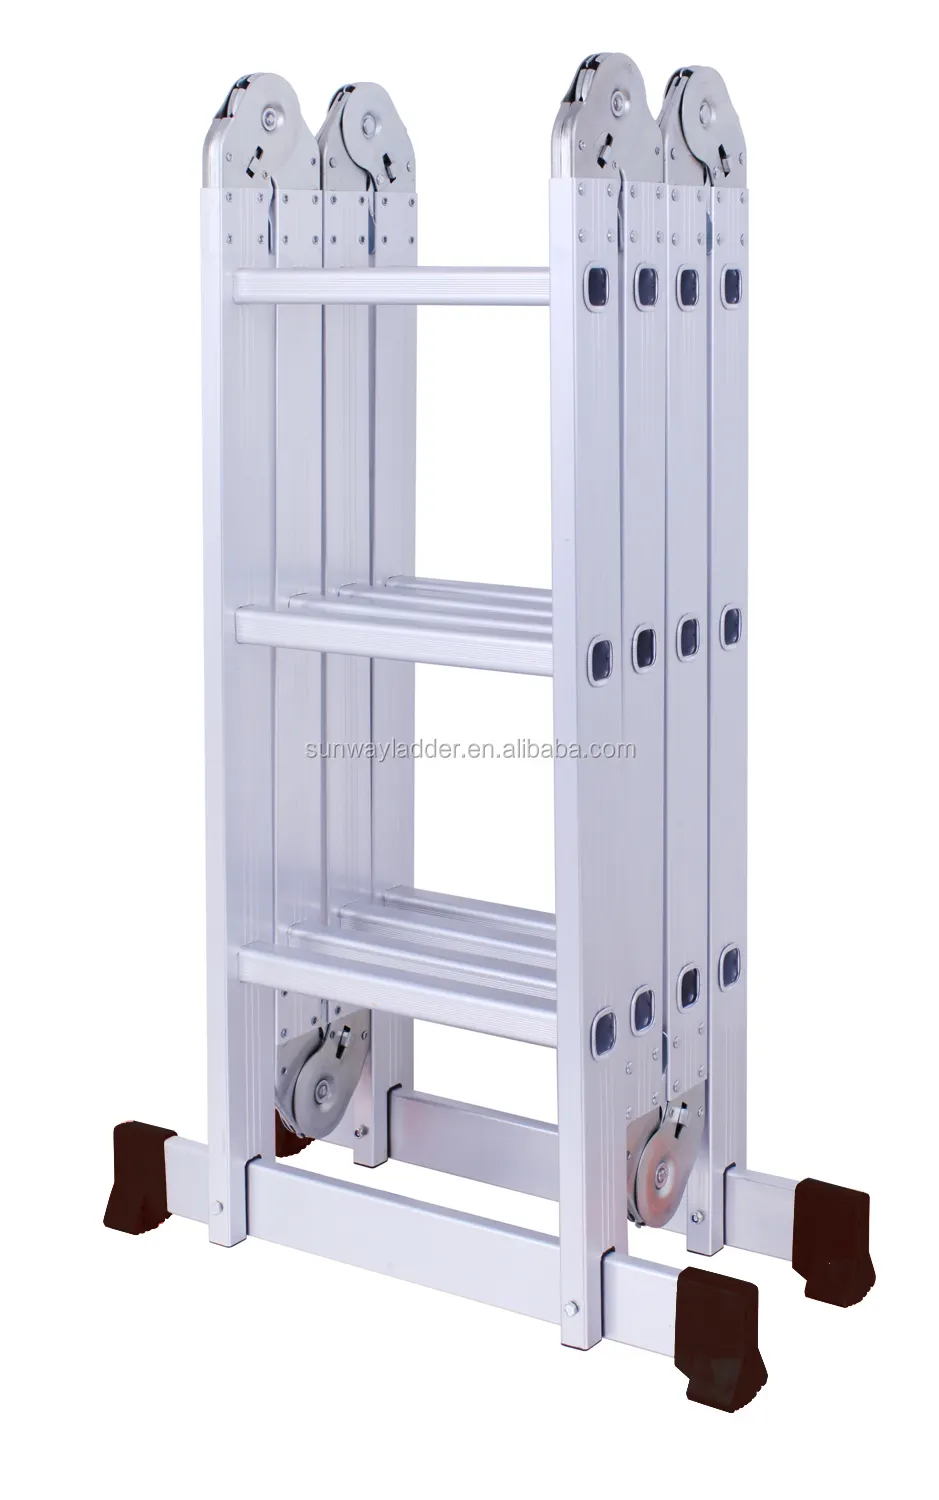 Step Aluminum Ladder En131 Multi Purpose Aluminum Articulated Step Ladder